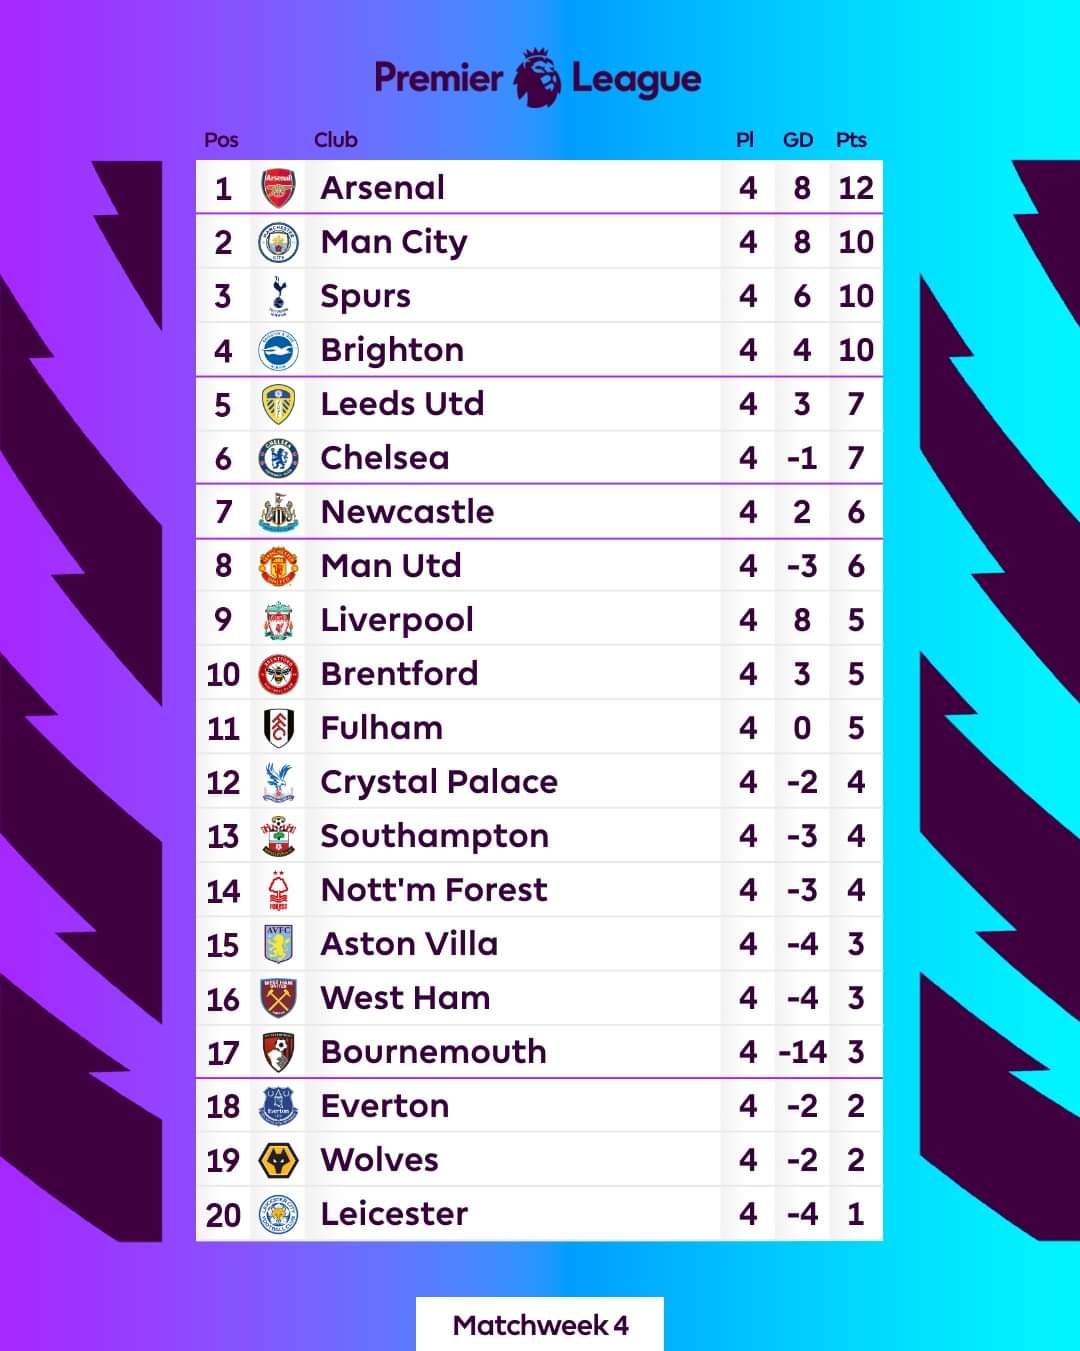 Arsenal lidera la de posiciones de la Premier League | Noti-America.com